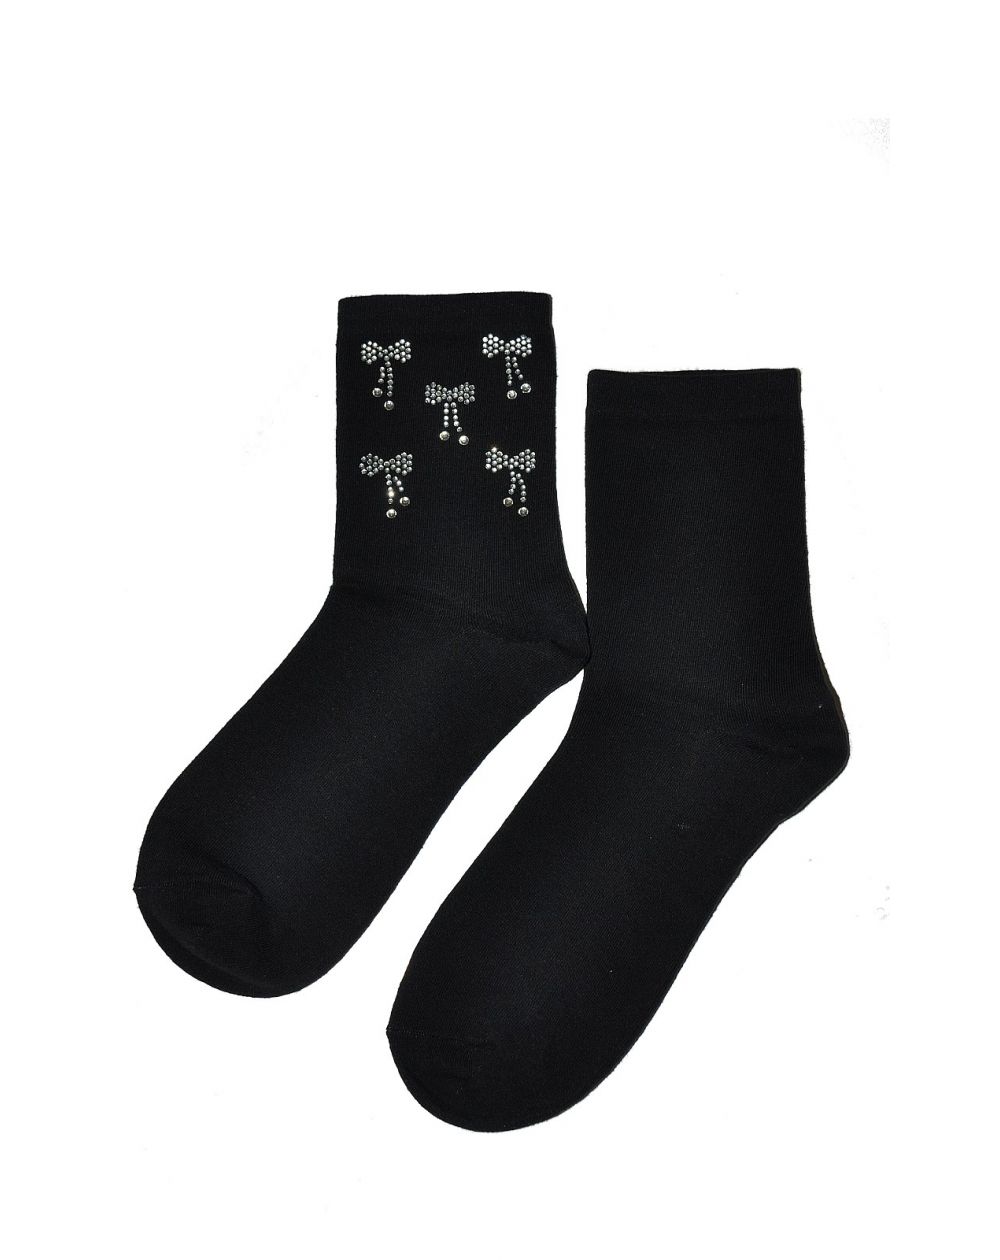 Magnetis 71 Zirconia Bow 21/22 socks